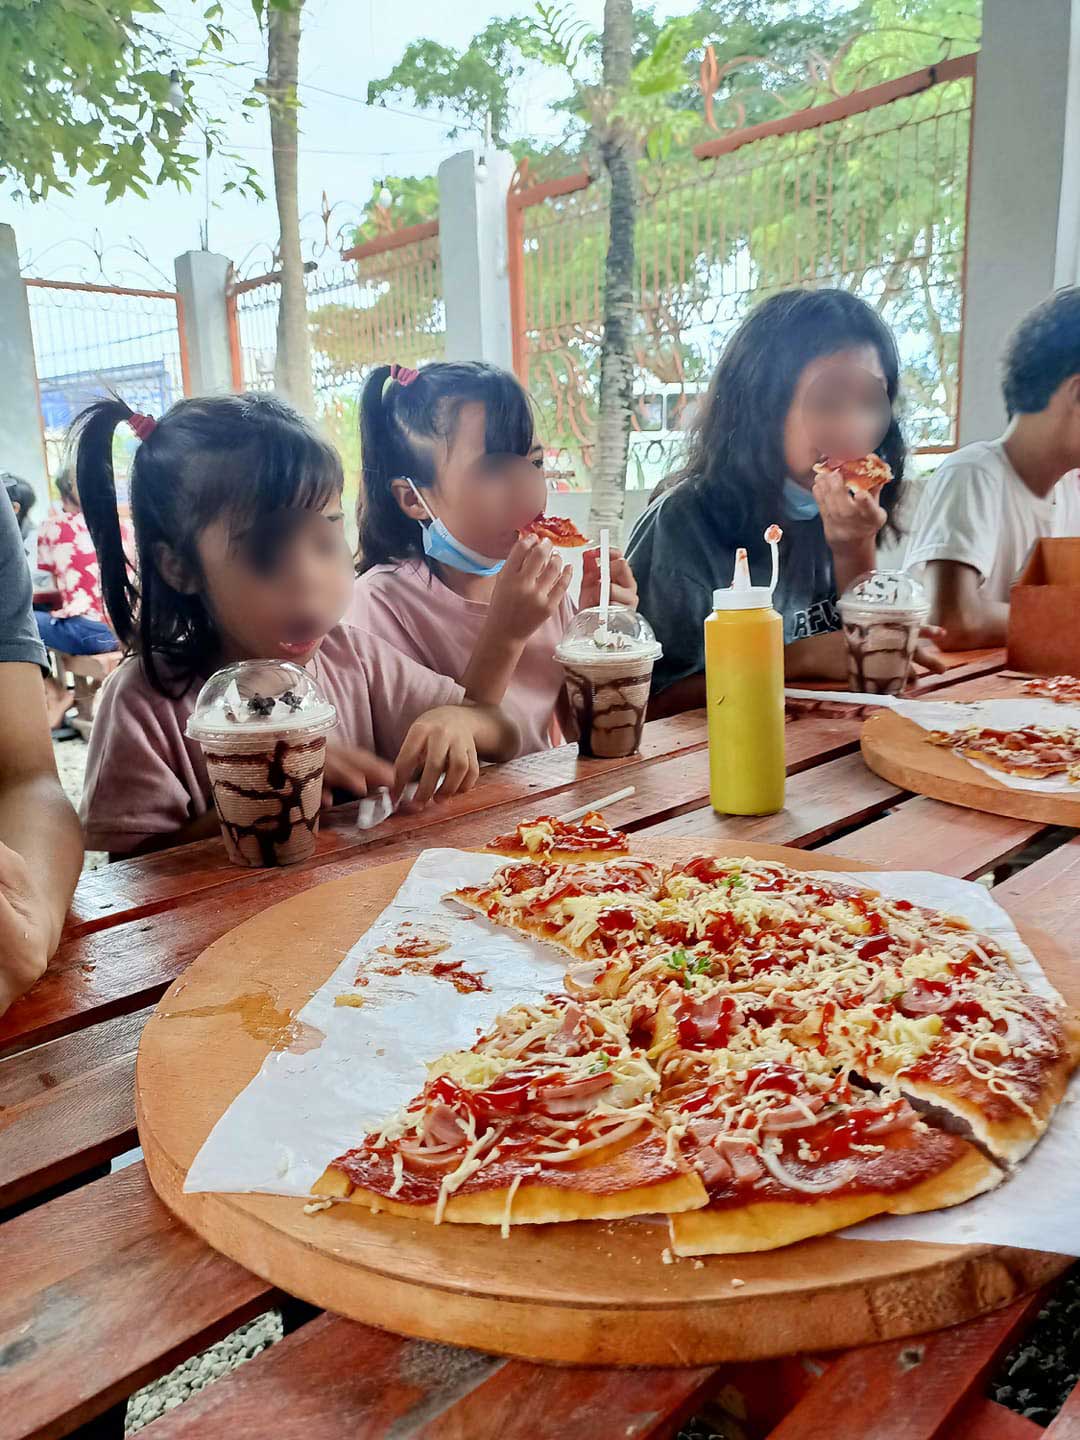 Children having pizza party in Philippines